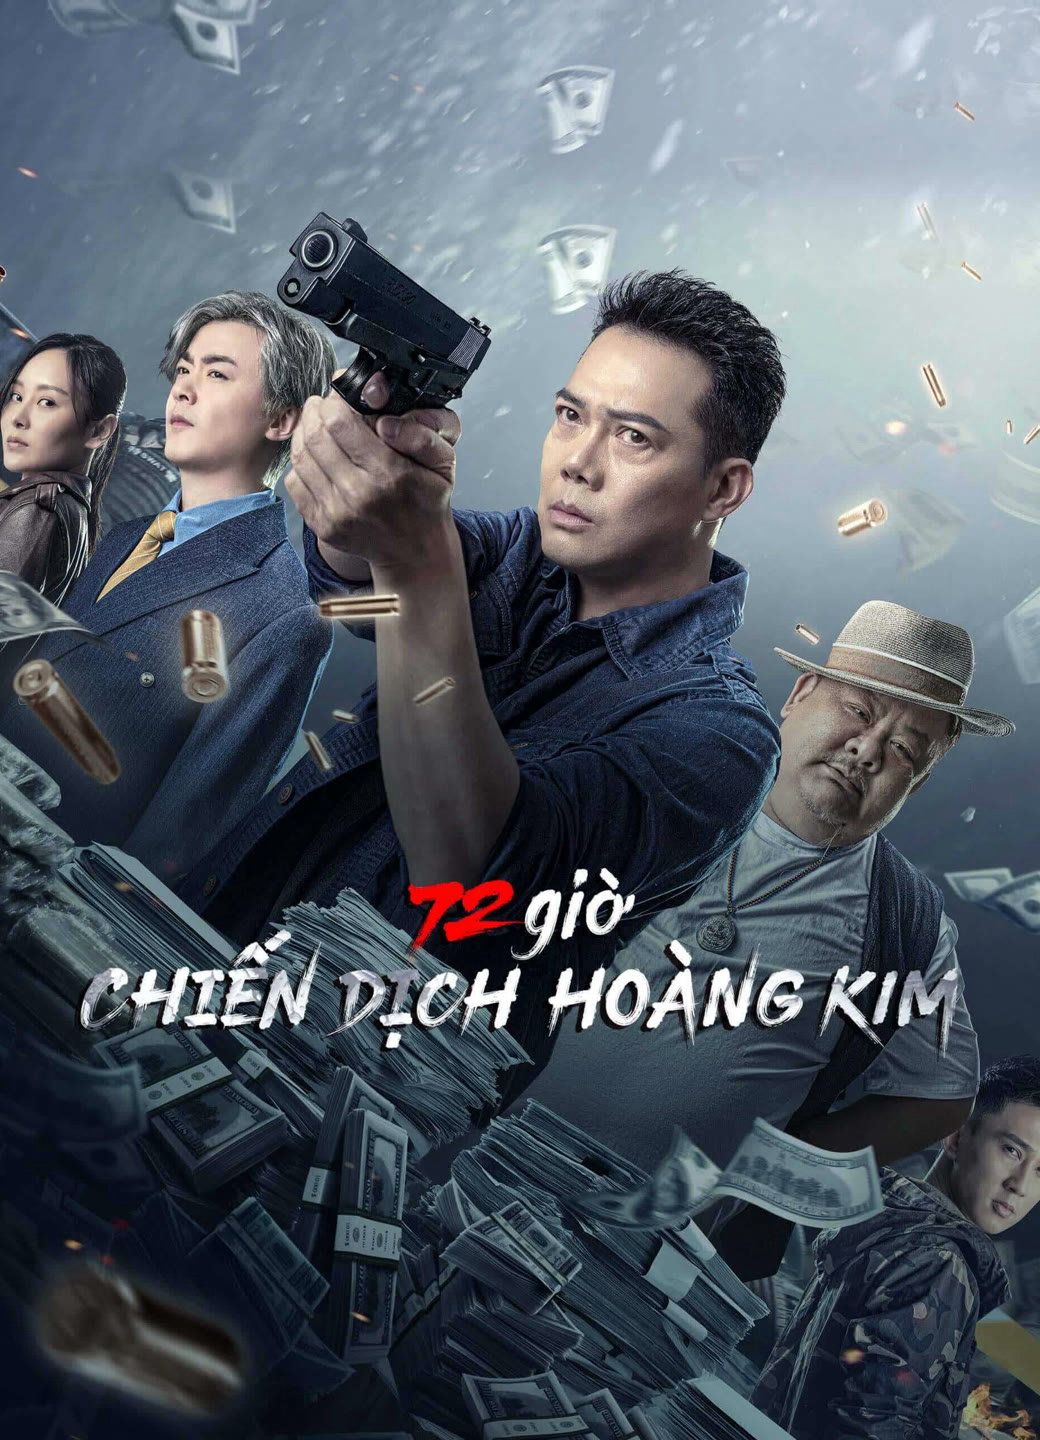 Poster Phim 72 giờ: Chiến Dịch Hoàng Kim (72 hour golden operation)